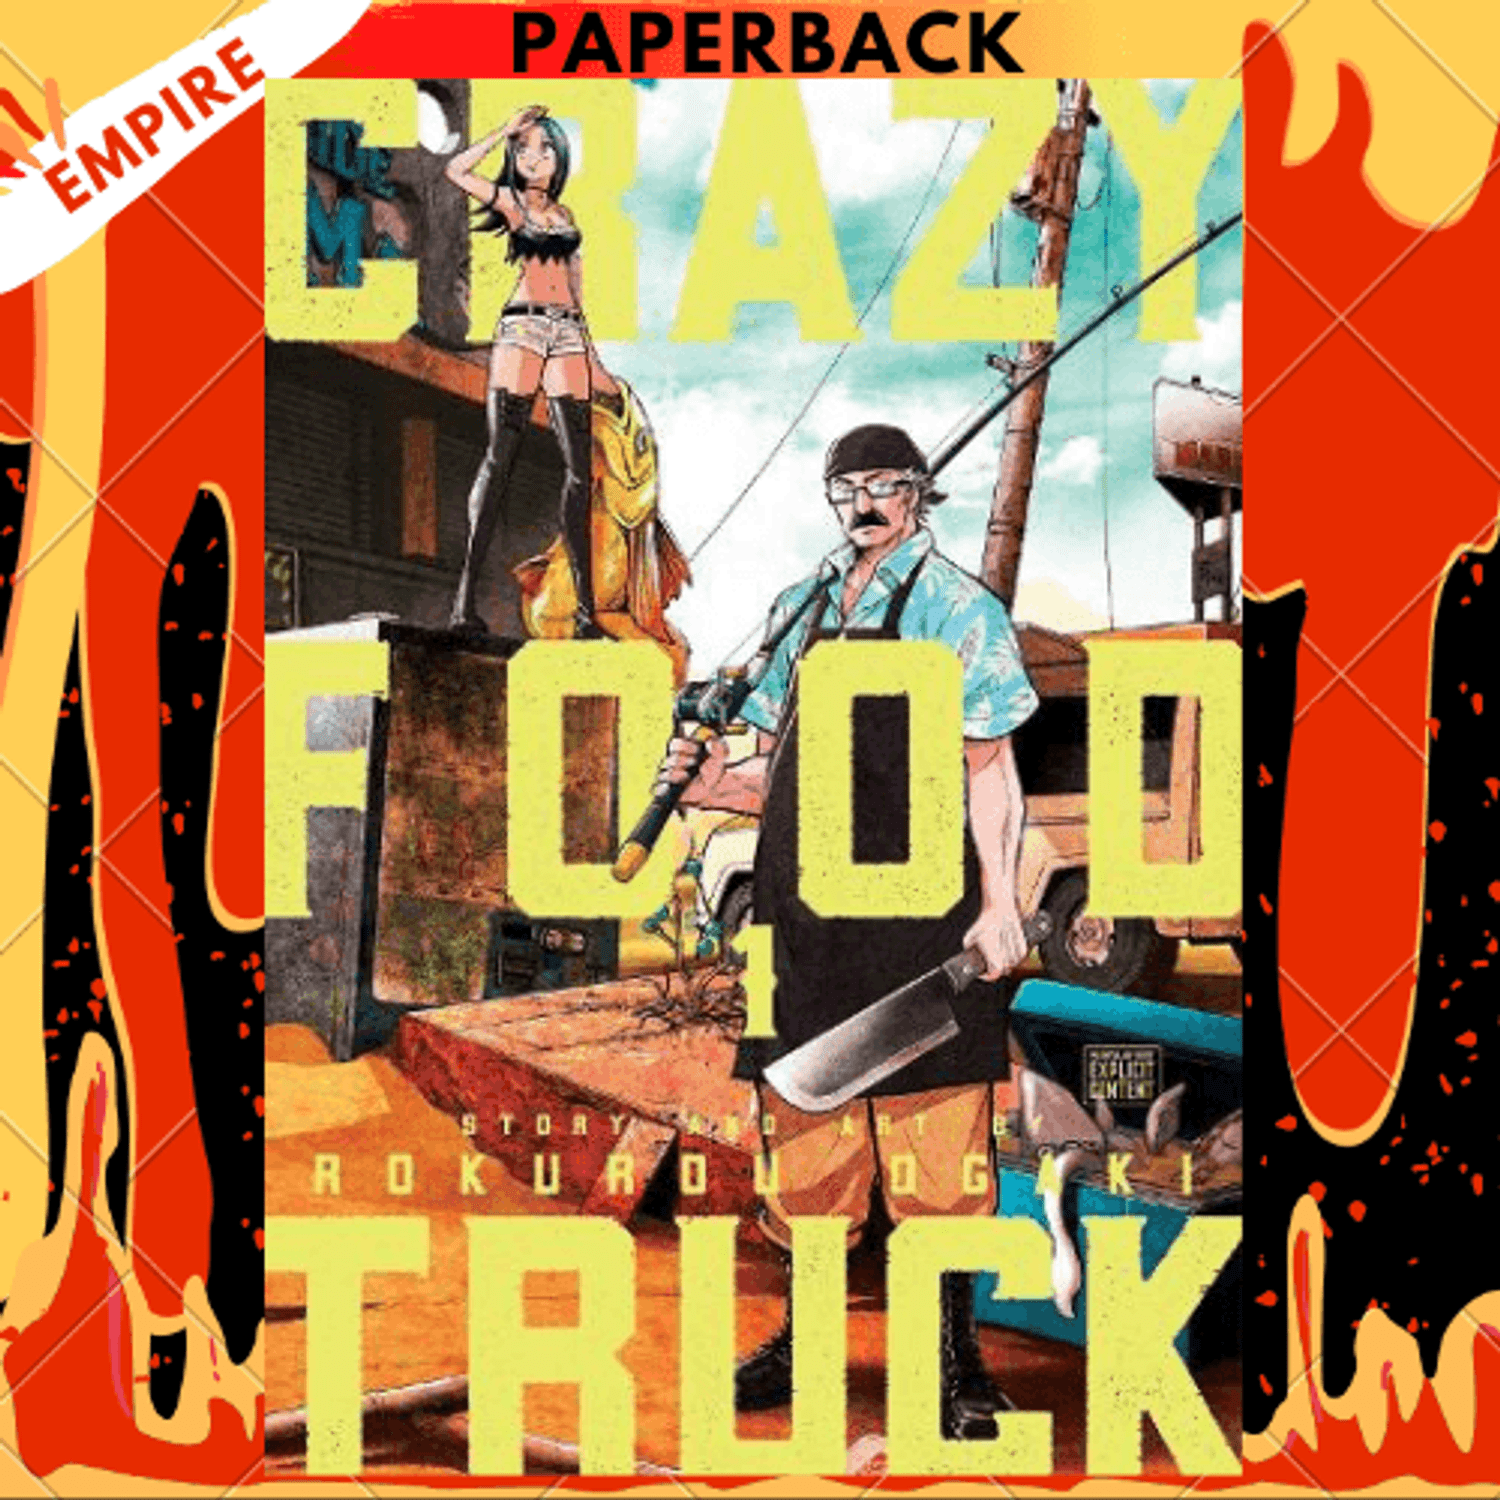 Crazy Food Truck, Vol. 1 by Rokurou Ogaki, Paperback